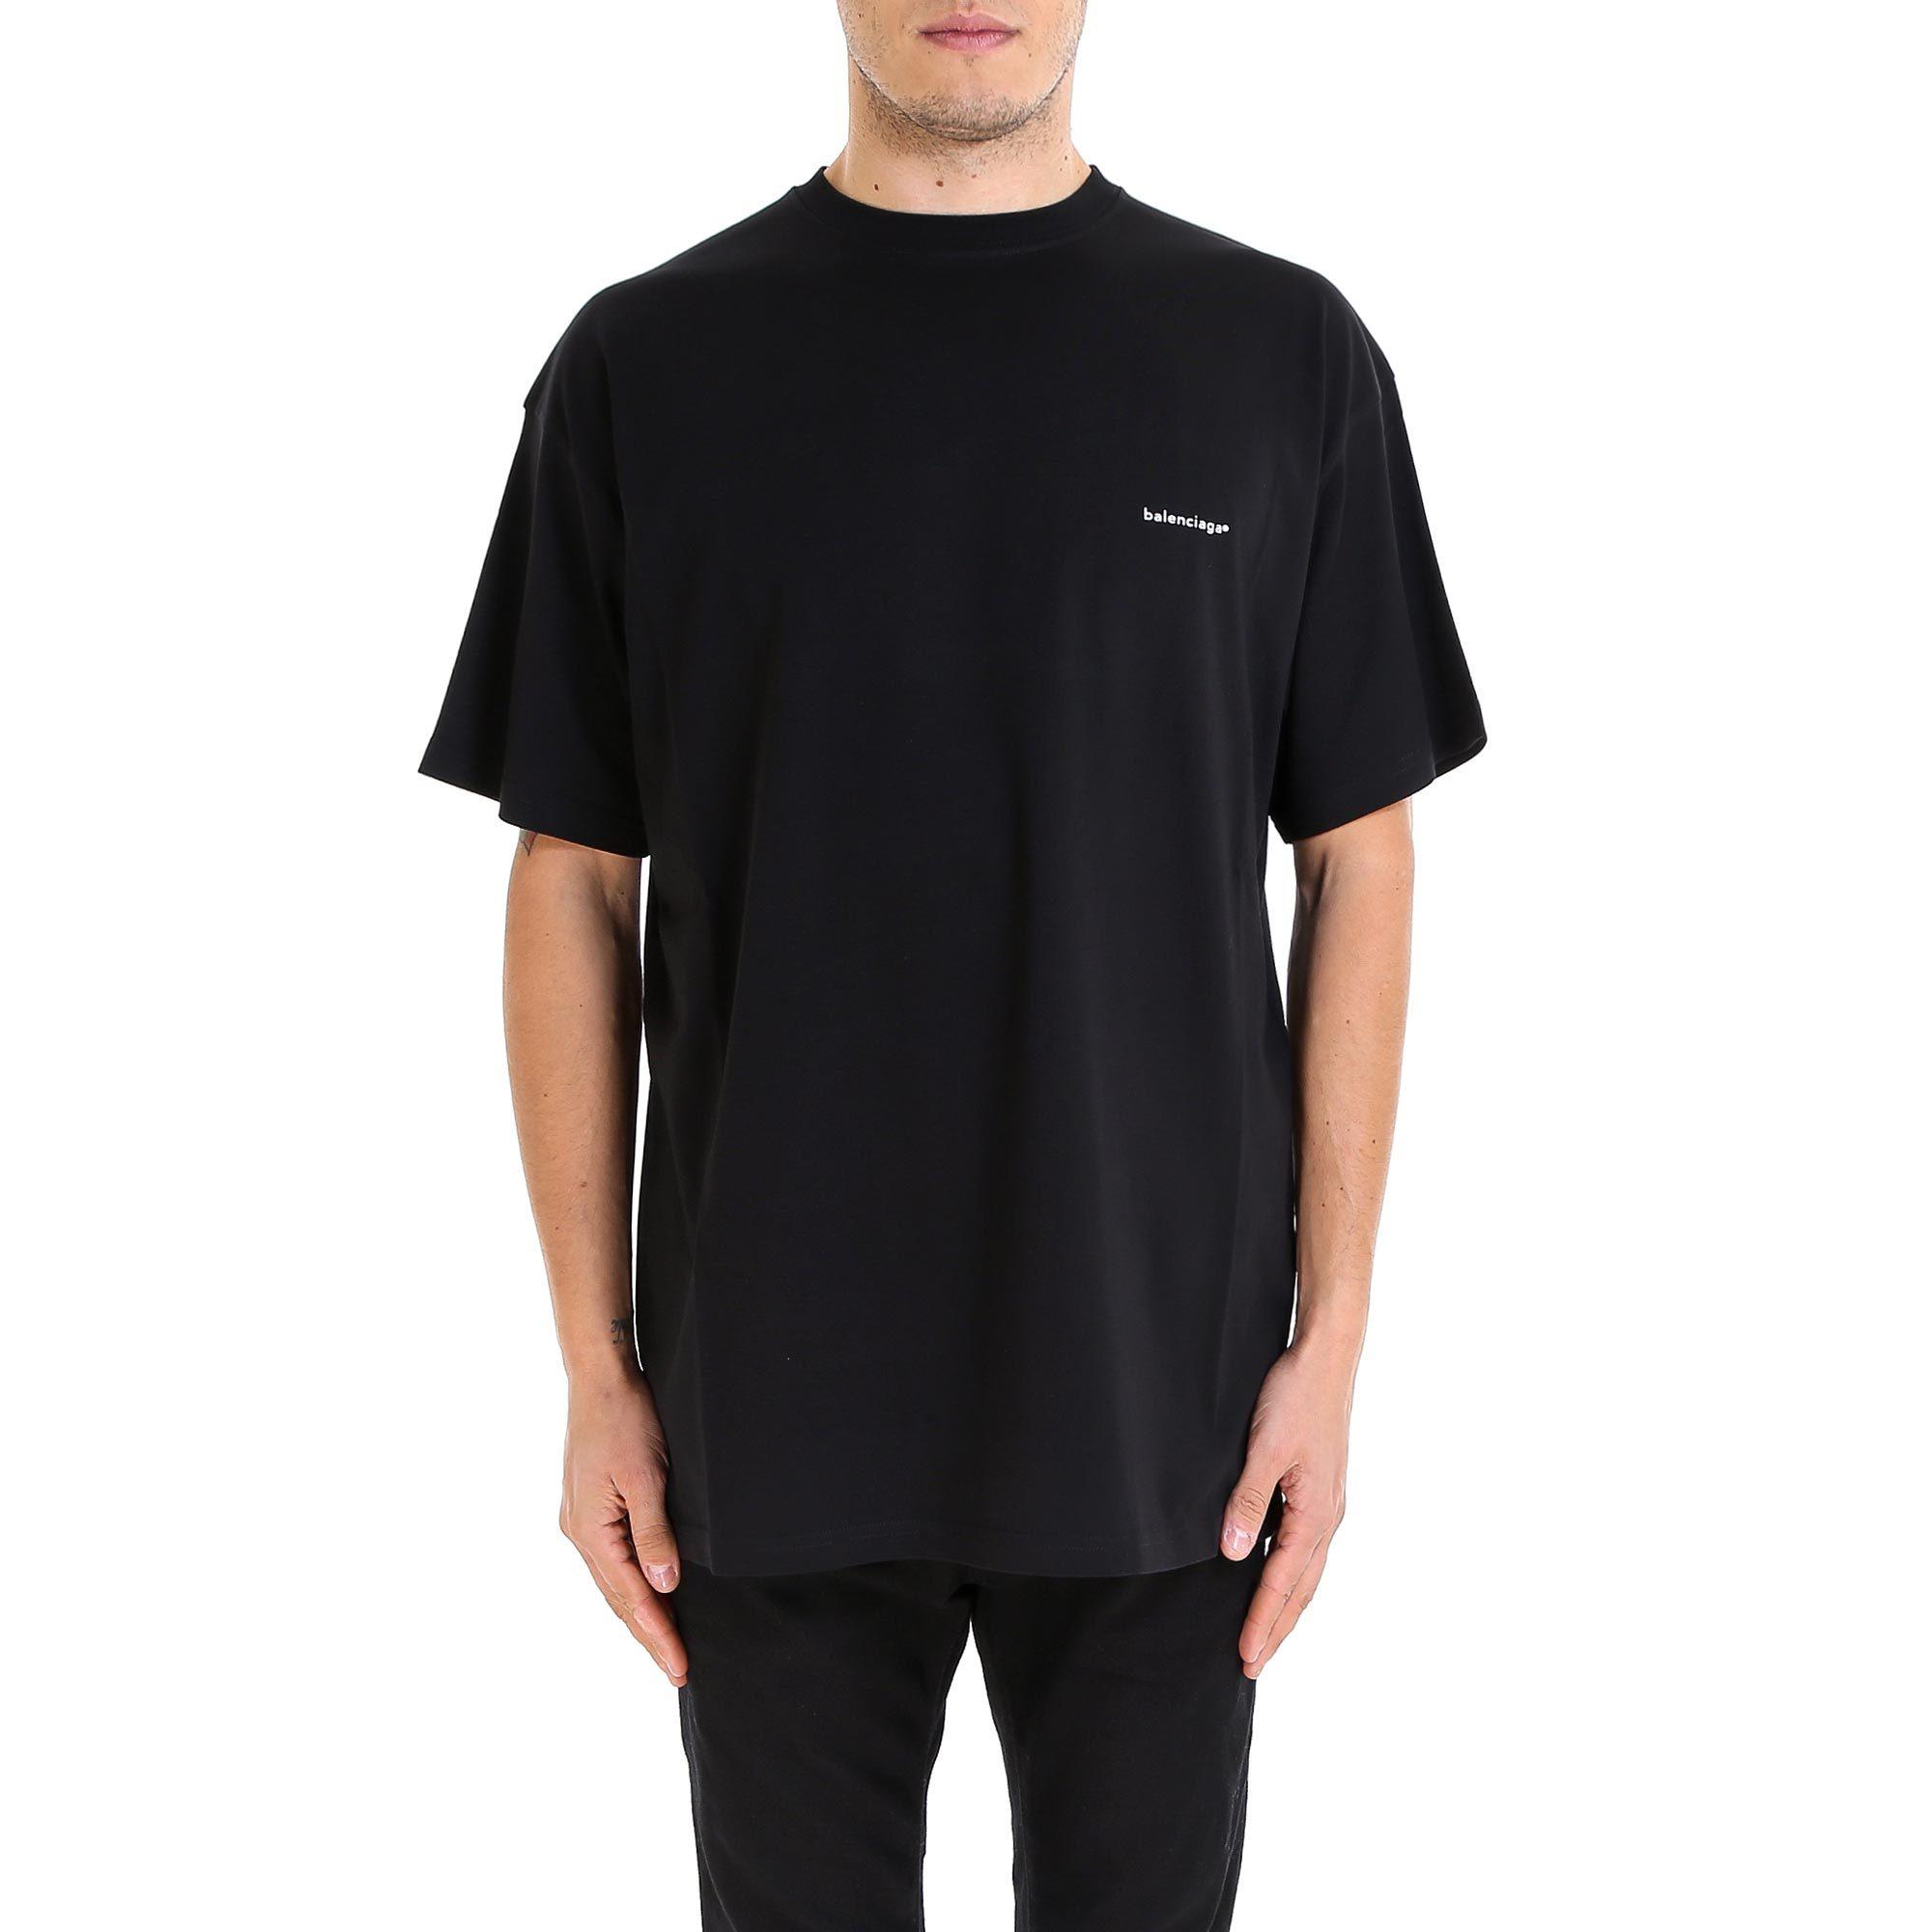 Balenciaga Logo Crew Neck T-shirt in Black for Men - Lyst